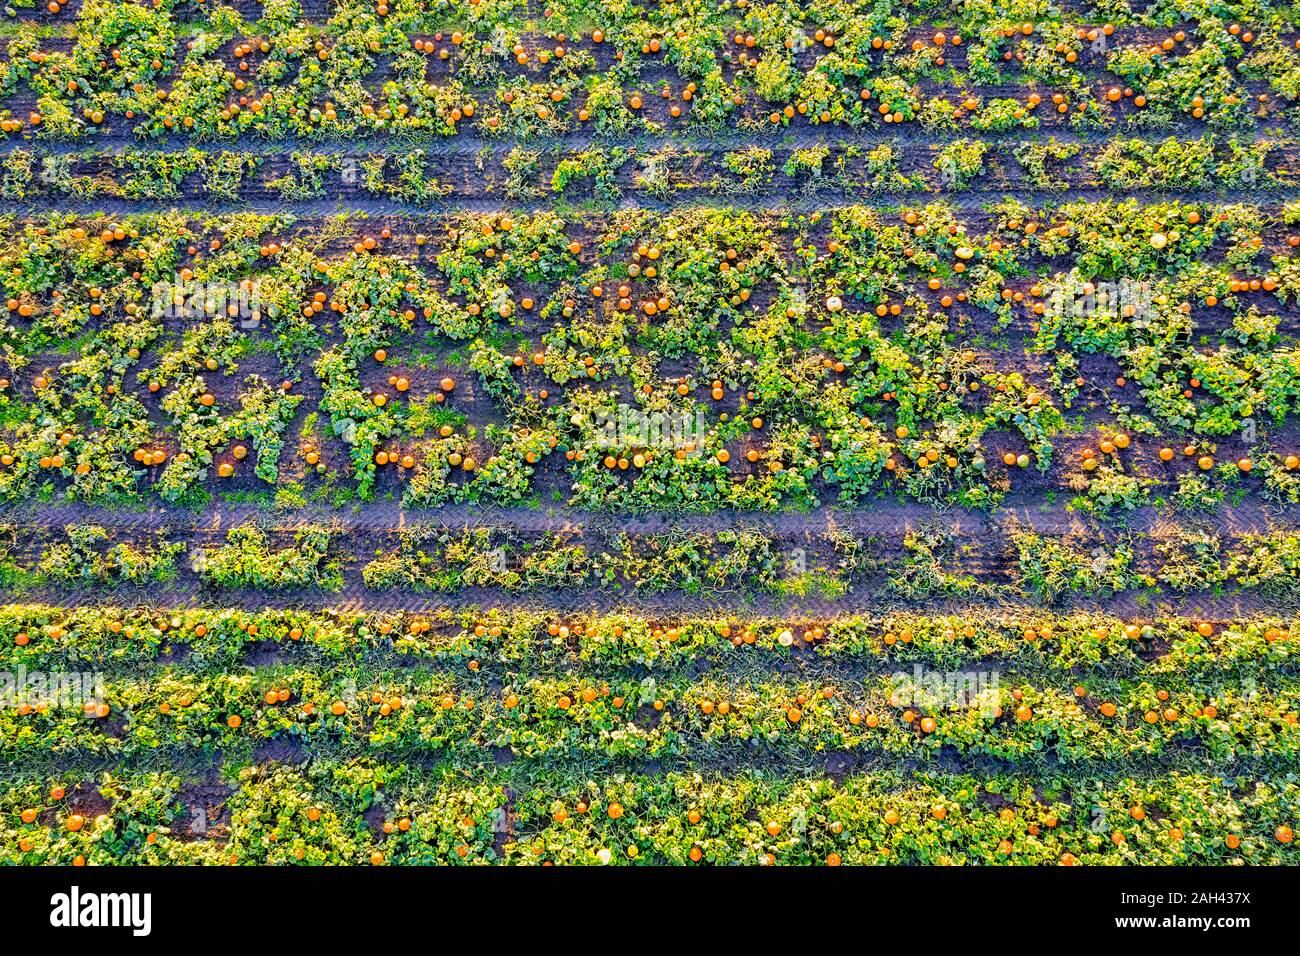 Scotland, East Lothian, Field of pumpkins (Cucurbita) Stock Photo